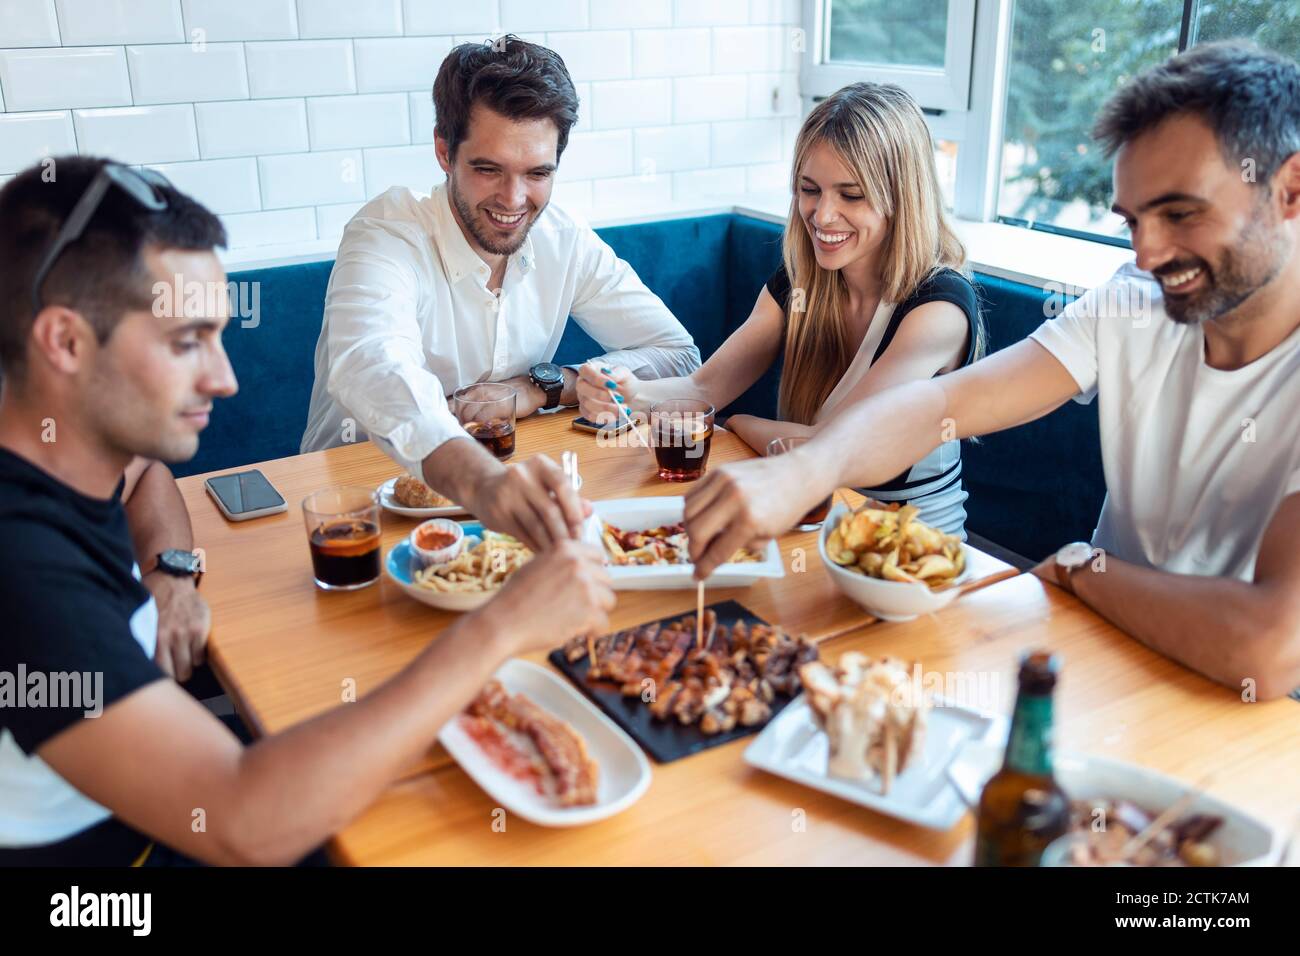 Friends having meal in restaurant Stock Photo